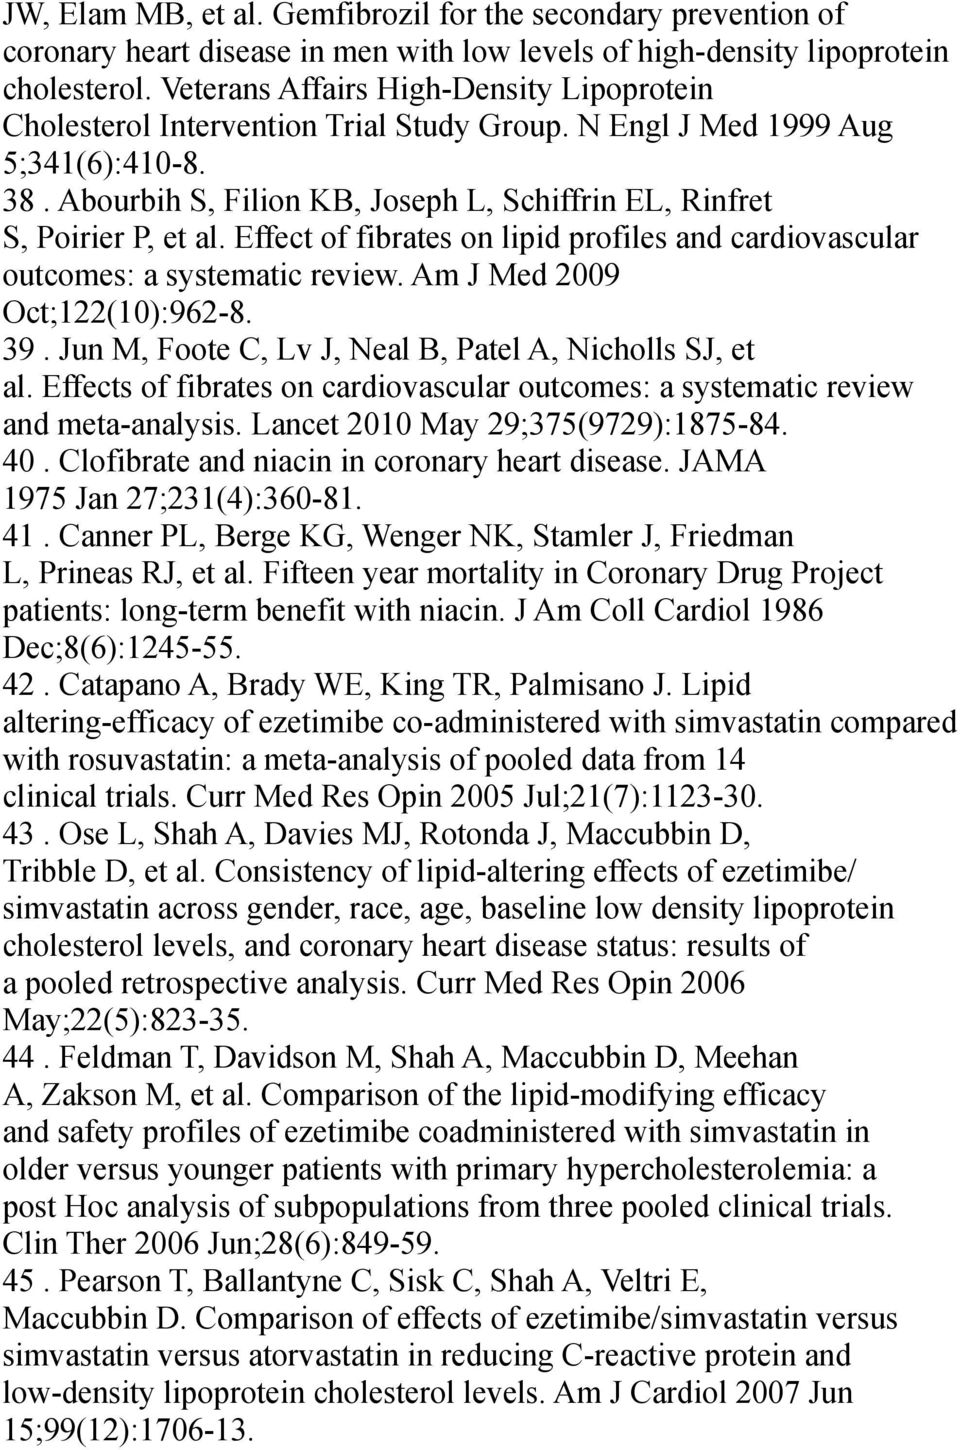 Abourbih S, Filion KB, Joseph L, Schiffrin EL, Rinfret S, Poirier P, et al. Effect of fibrates on lipid profiles and cardiovascular outcomes: a systematic review. Am J Med 2009 Oct;122(10):962-8. 39.